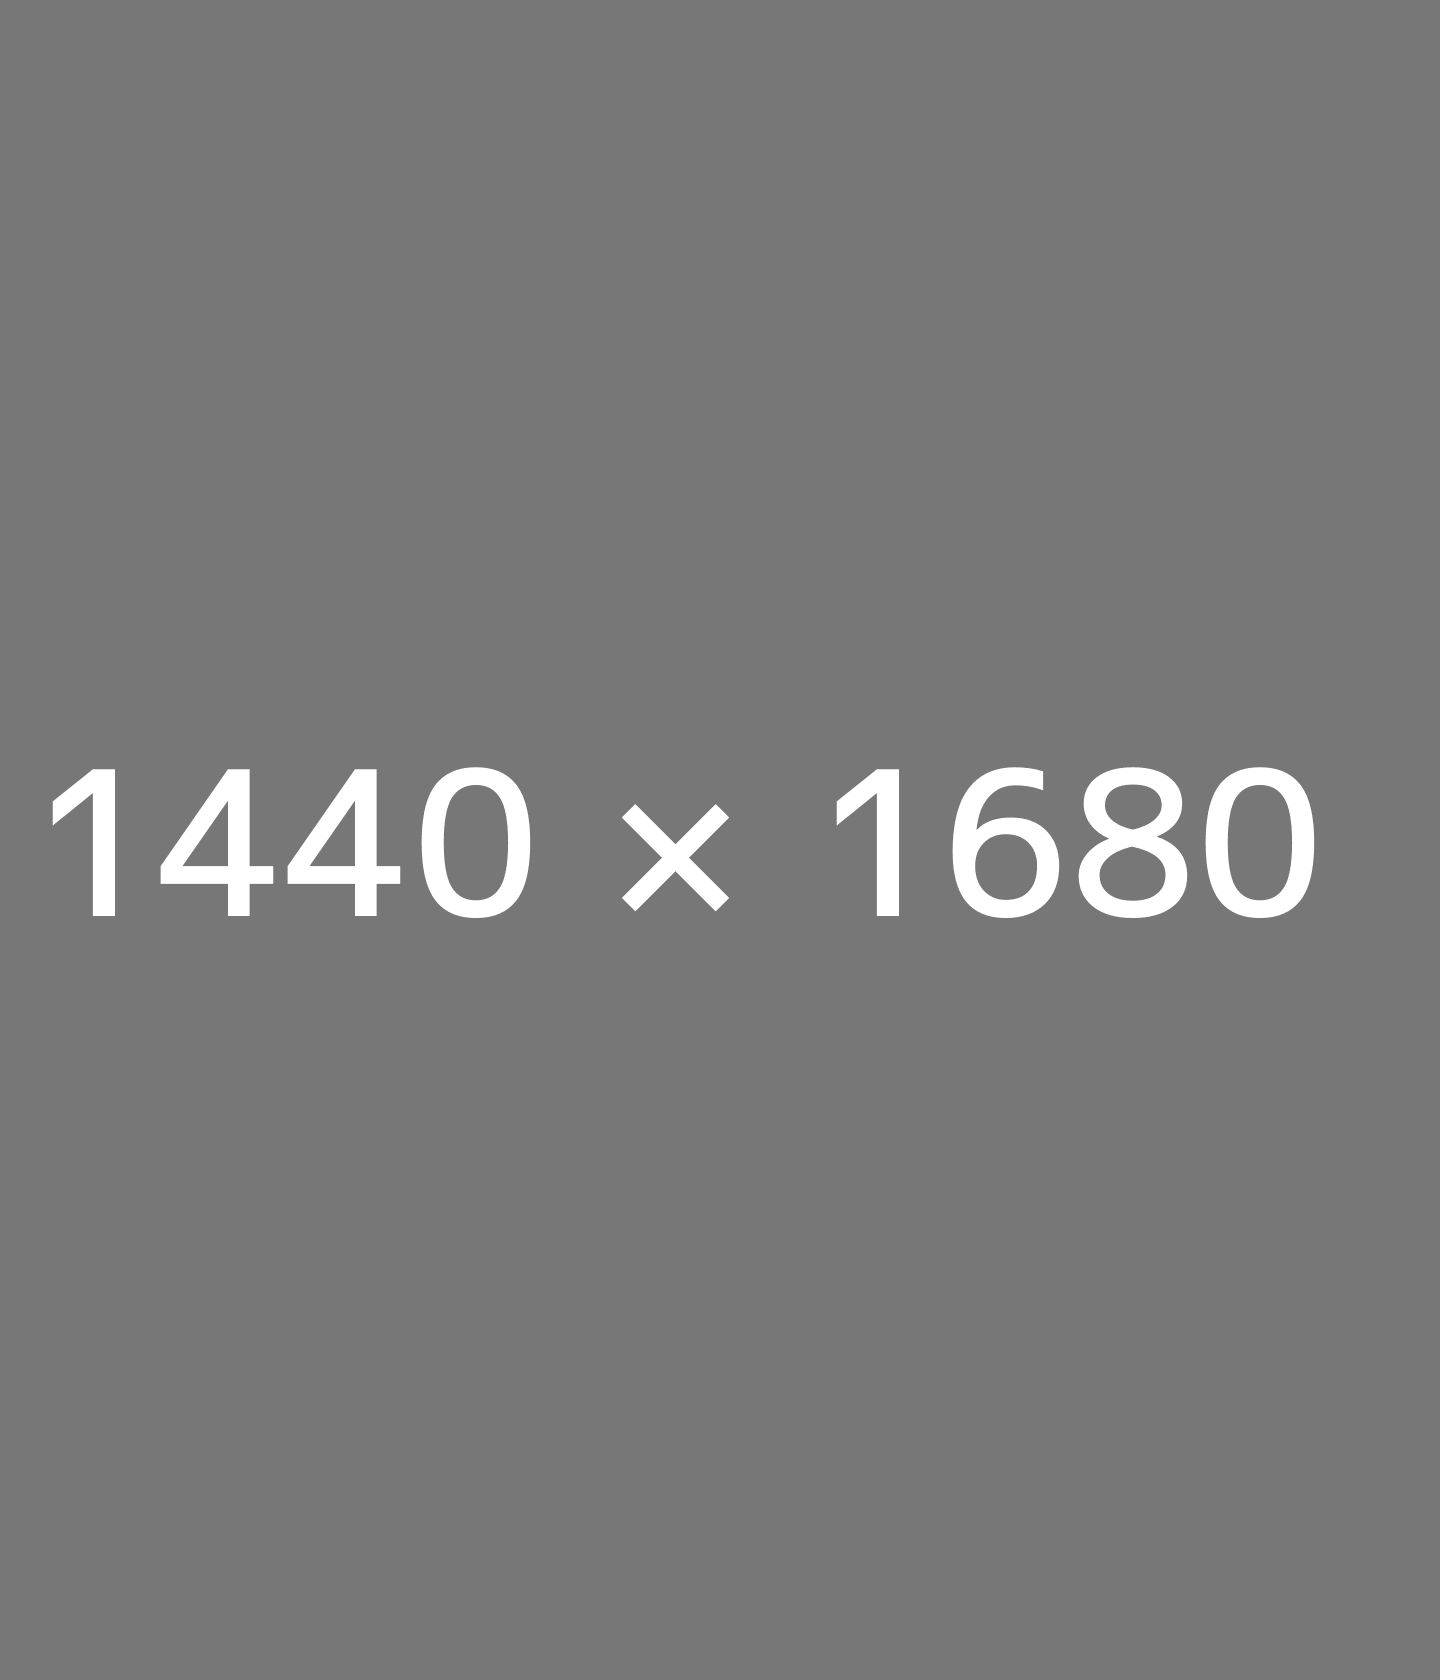 1440 x 1680 (6:7 Aspect Ratio)